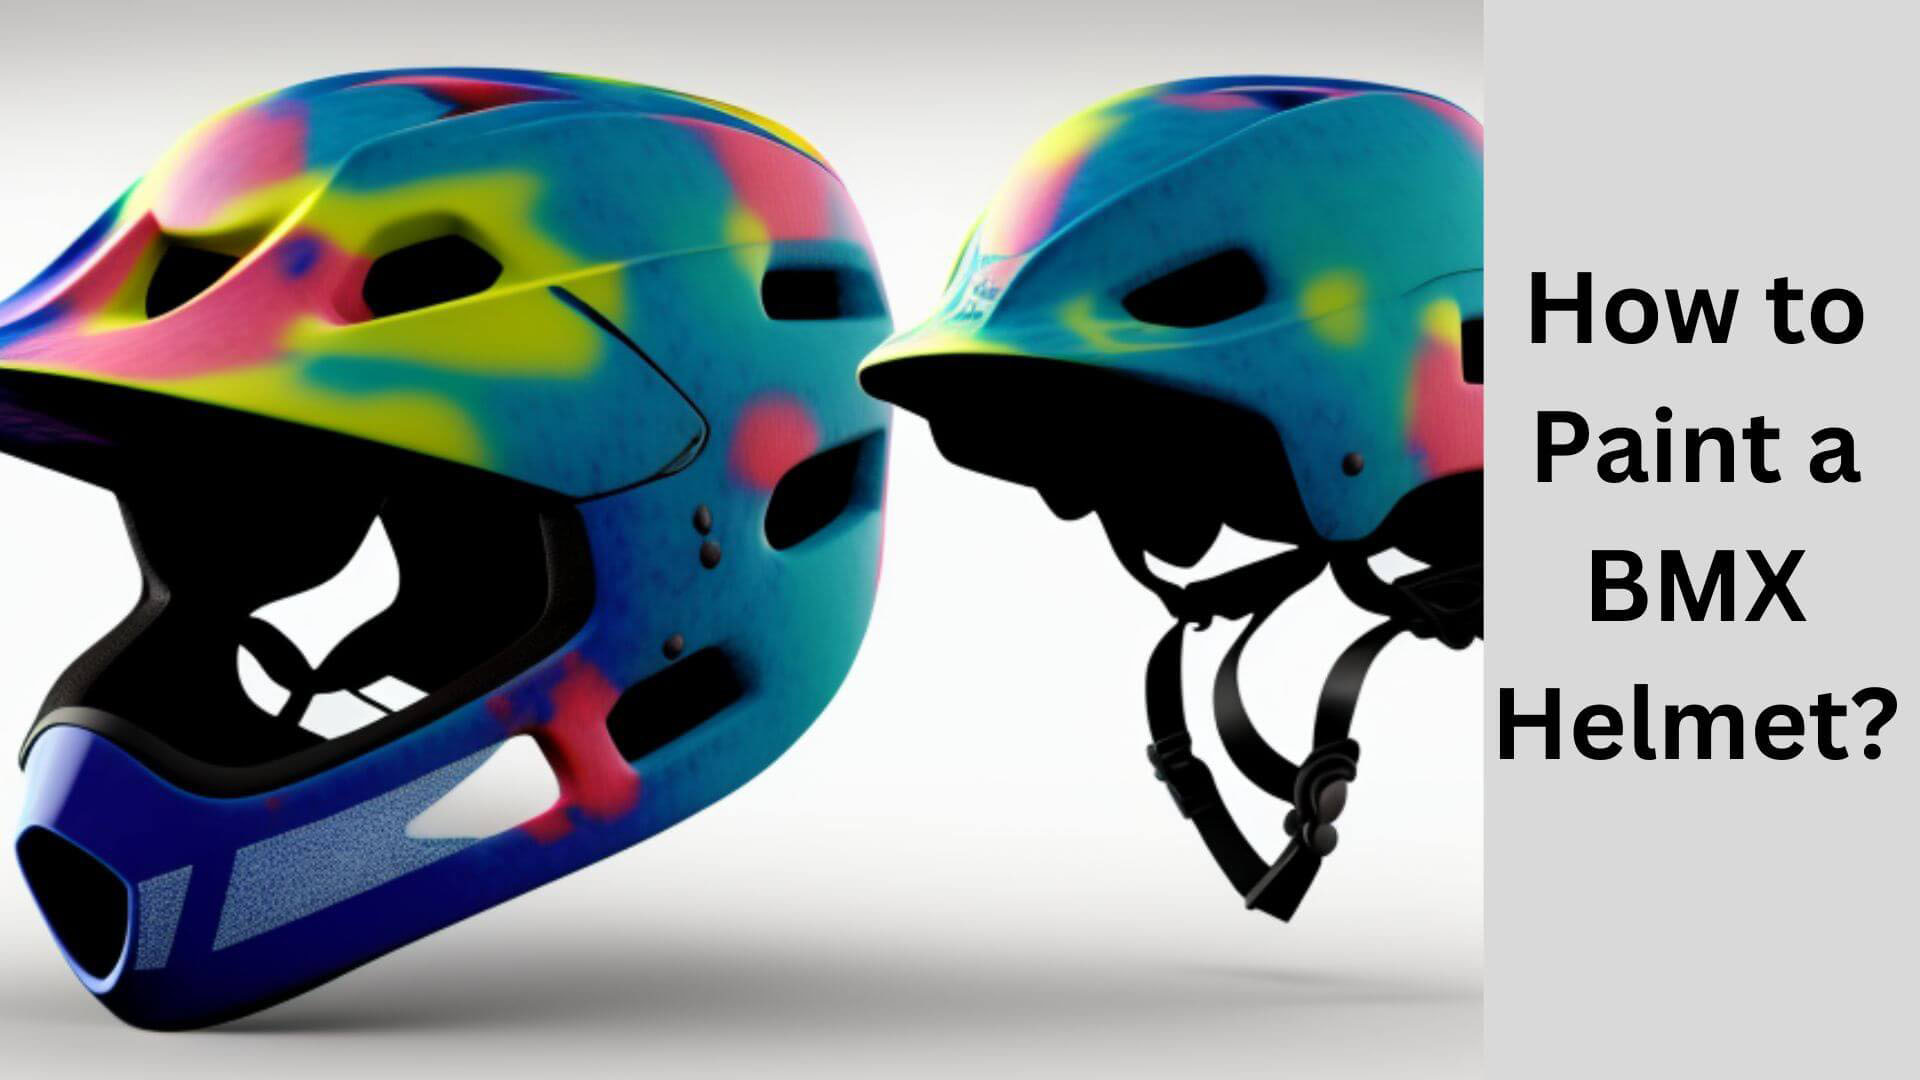 How to Paint a BMX Helmet?